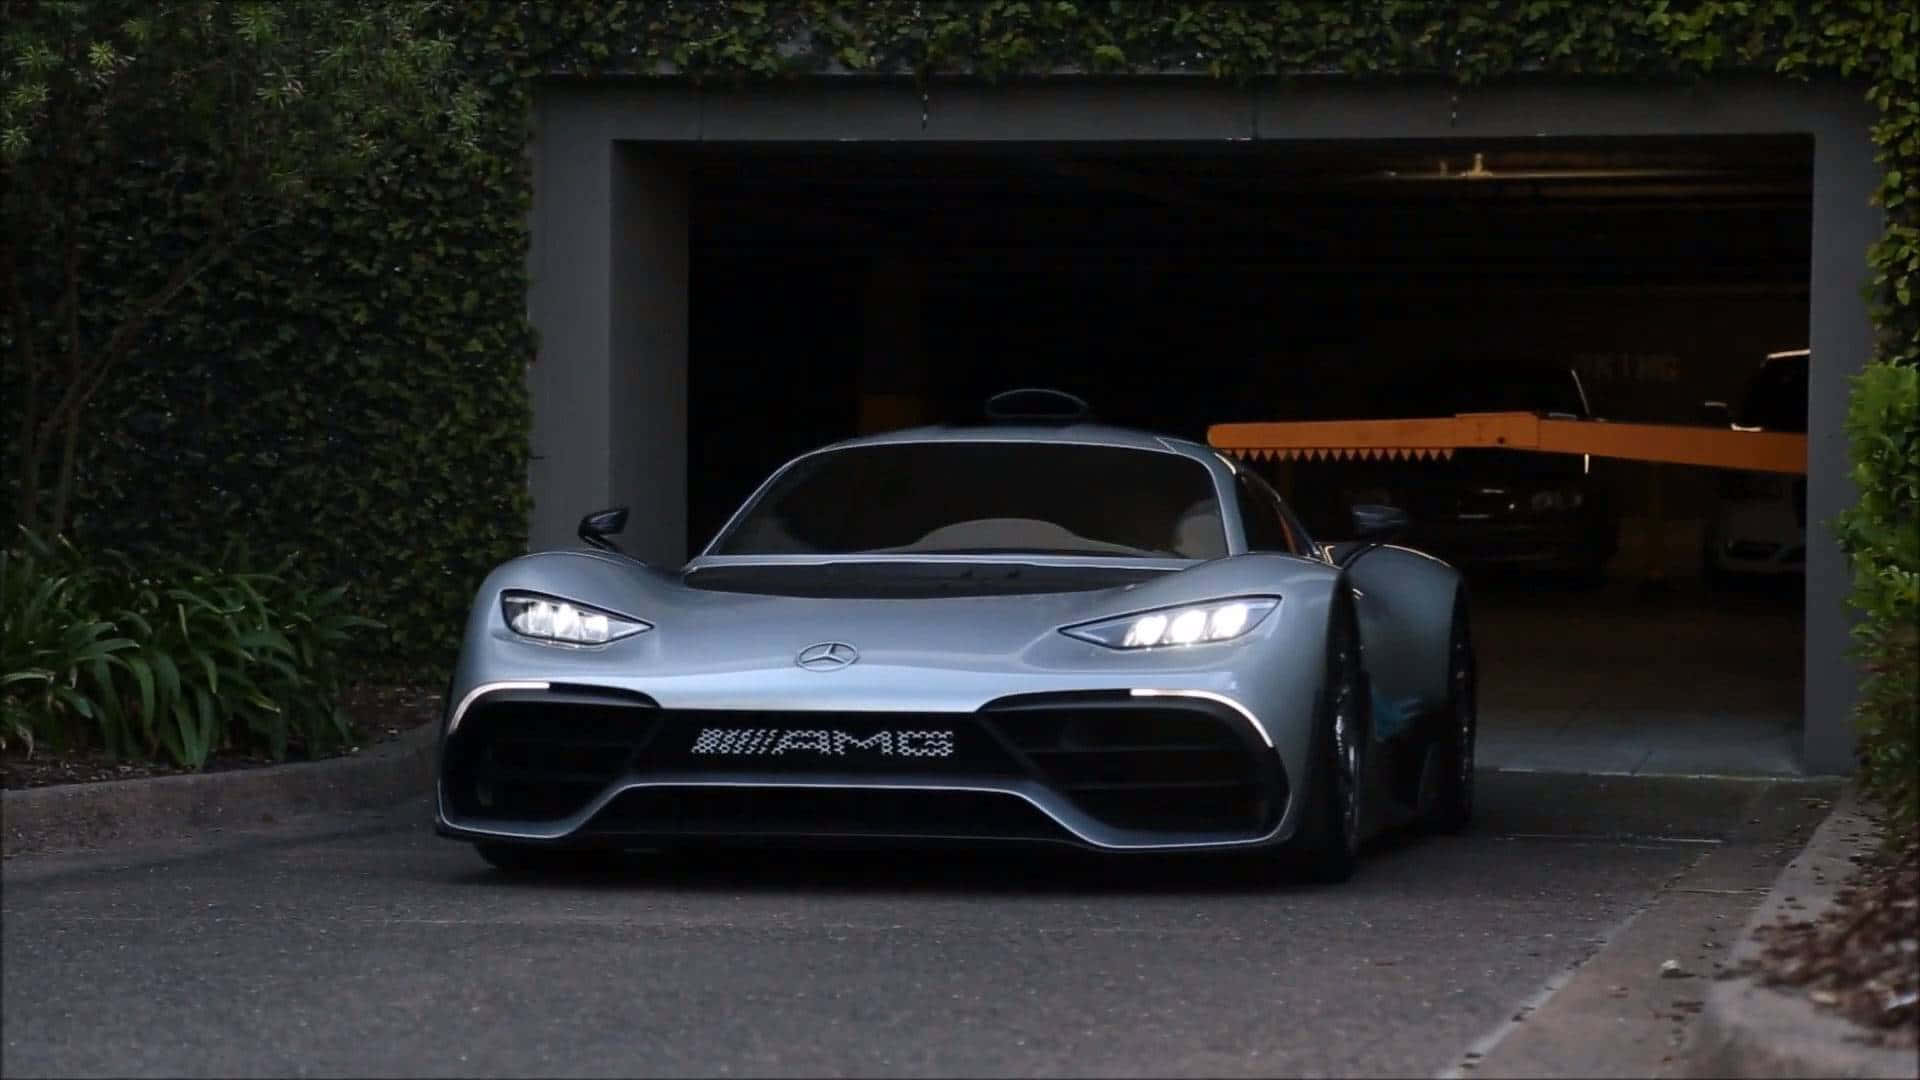 Mercedes Amg Background Outside Garage